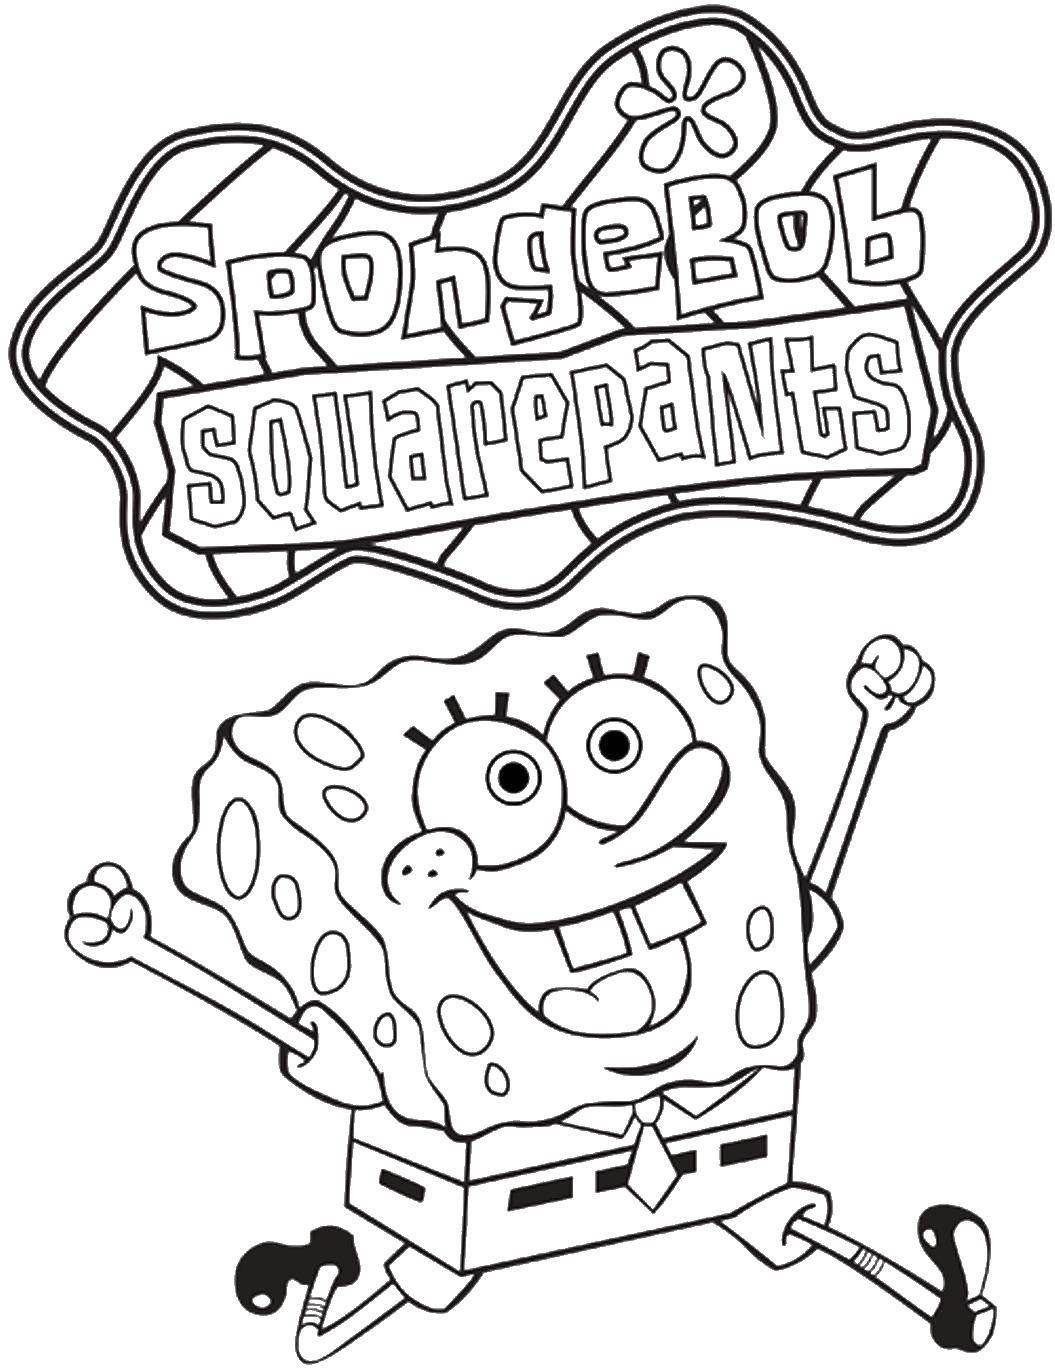 Coloring Gobabeb quadratischen. Category Spongebob. Tags:  The spongebob, spongebob, cartoons.